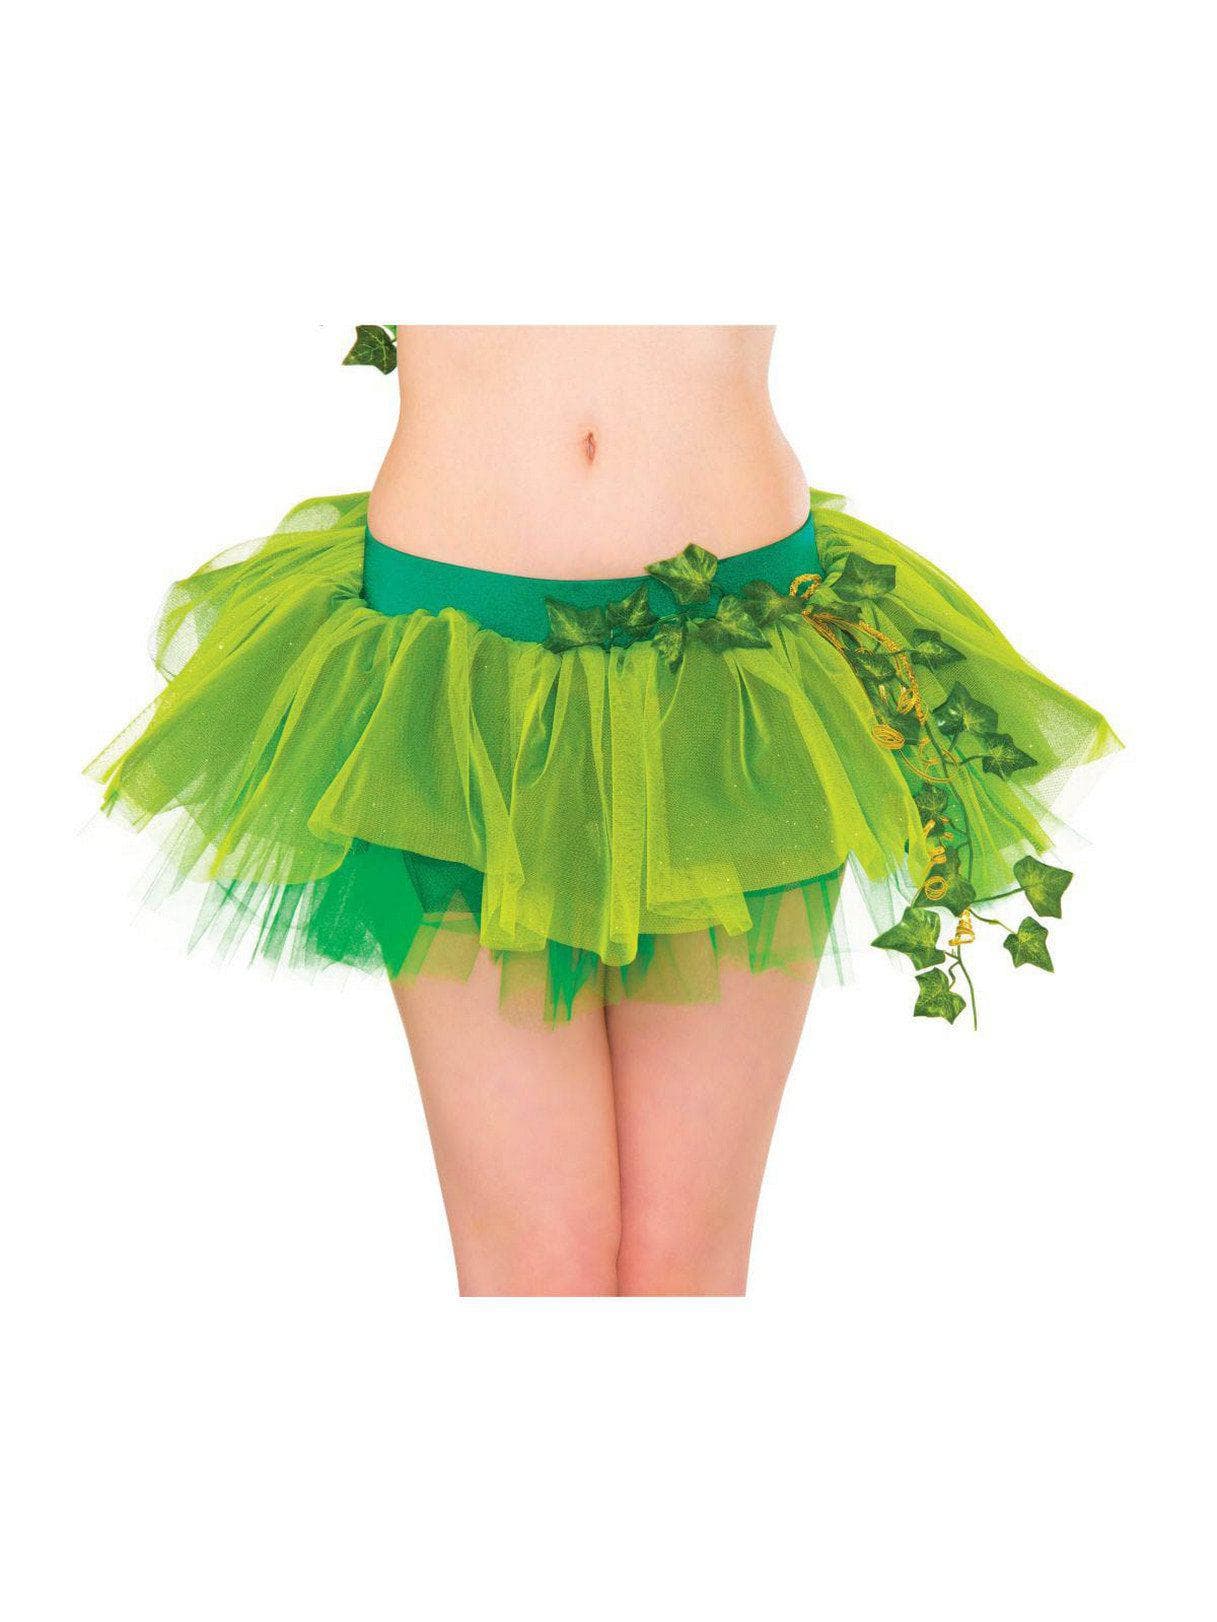 Adult DC Comics Poison Ivy Tutu Skirt - costumes.com